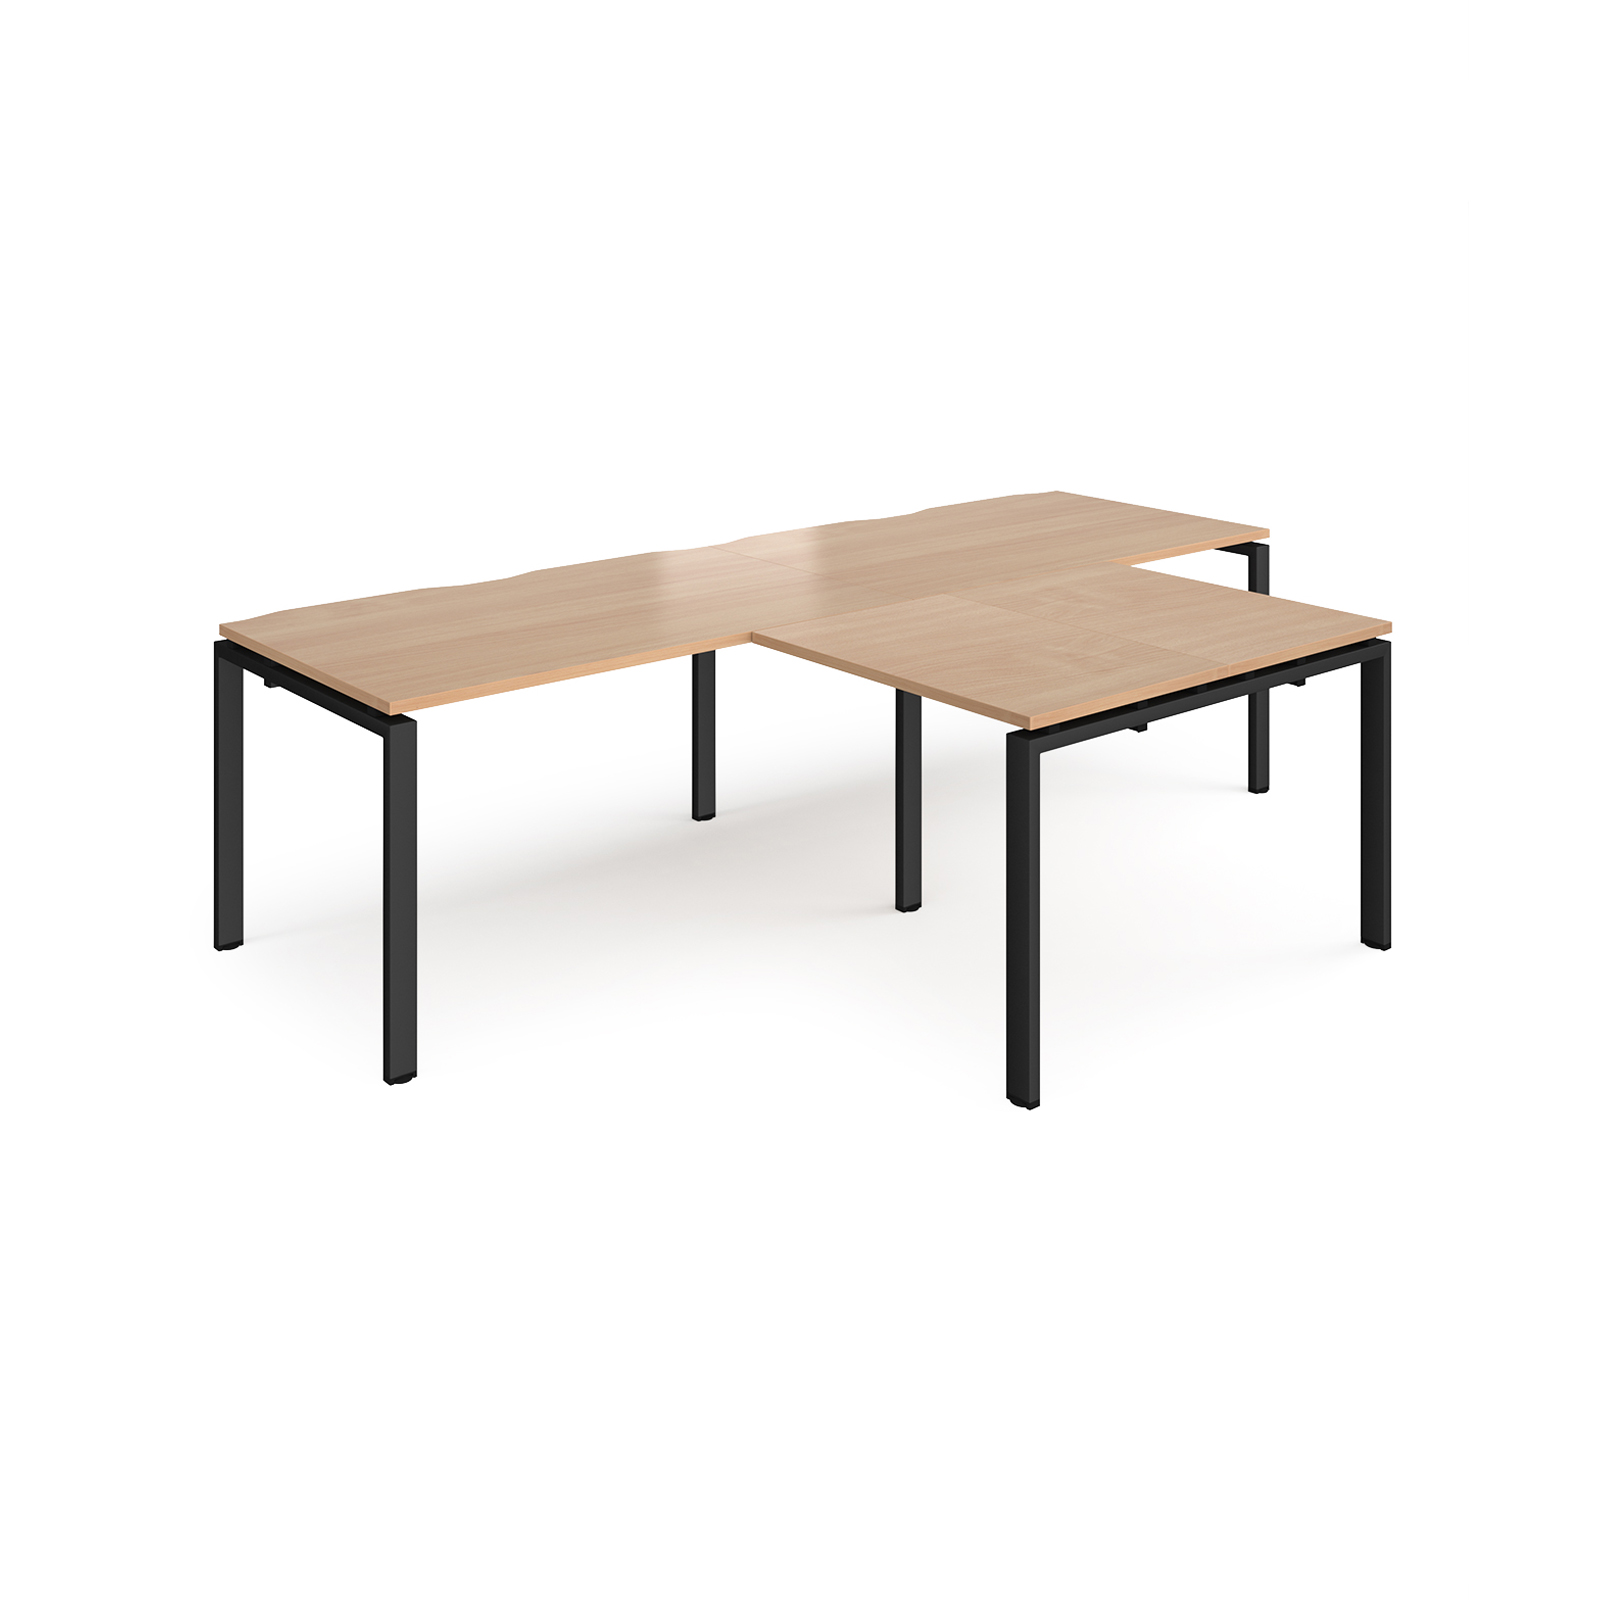 Adapt double straight desks 2800mm x 800mm with 800mm return desks - black frame, beech top